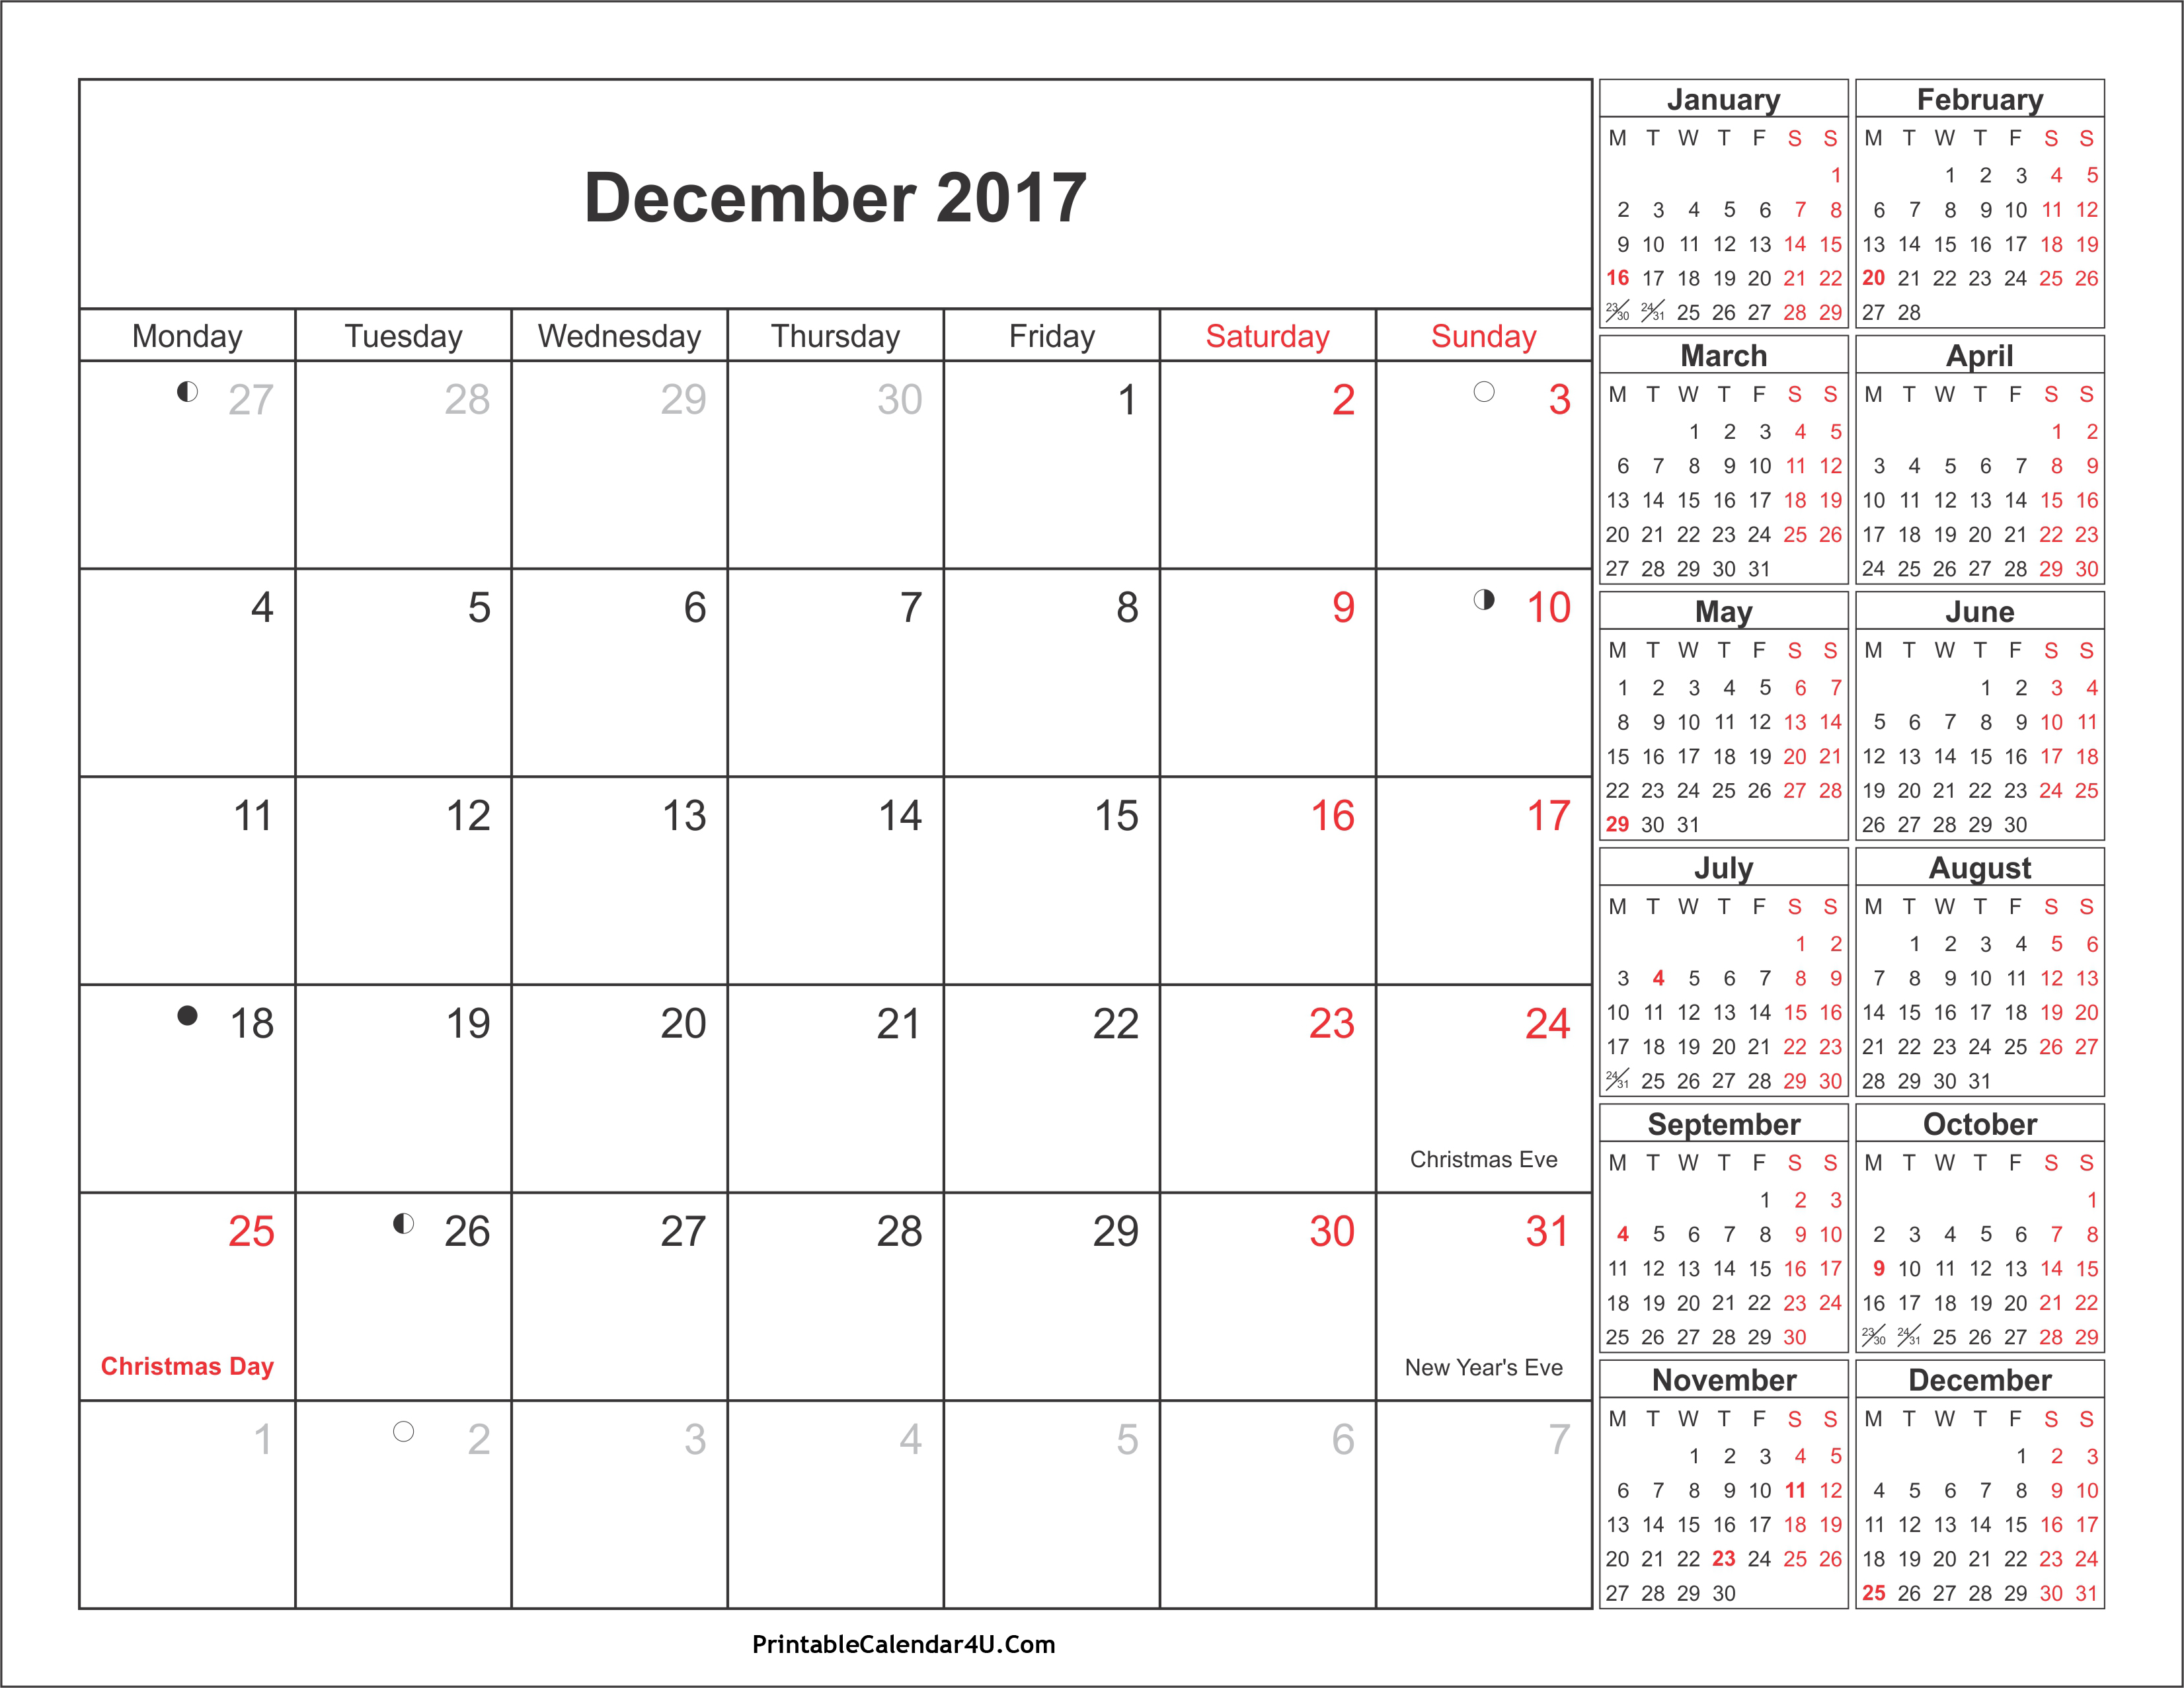 December 2017 calendar printable with holidays list